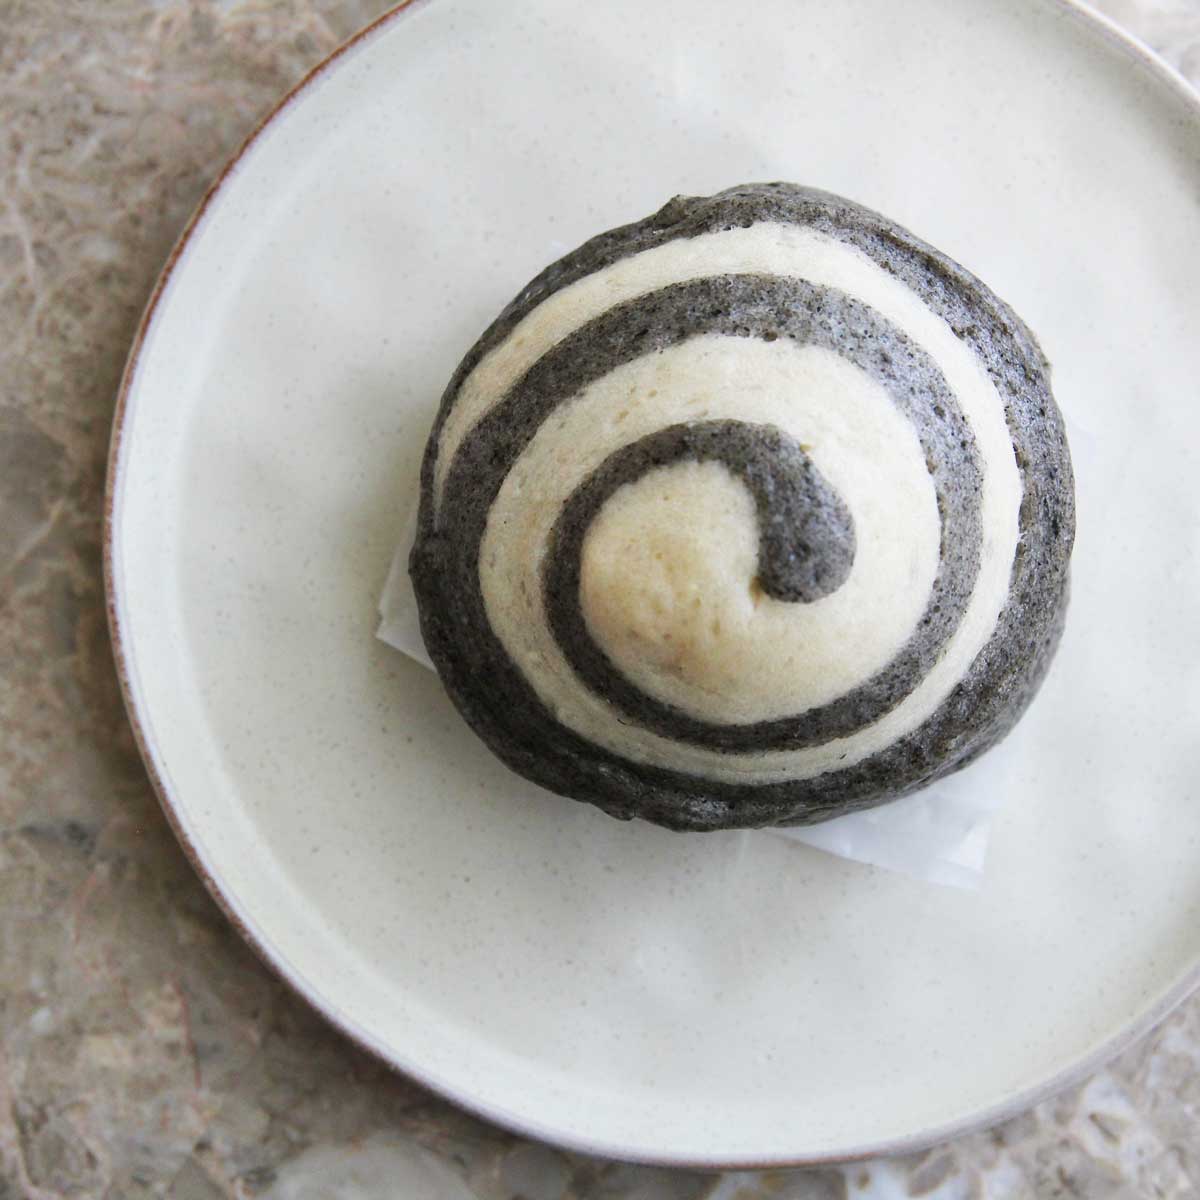 Homemade Black Sesame & Almond Milk Spiral Mantou (Vegan Steamed Buns Recipe) - Roasted Corn Naan